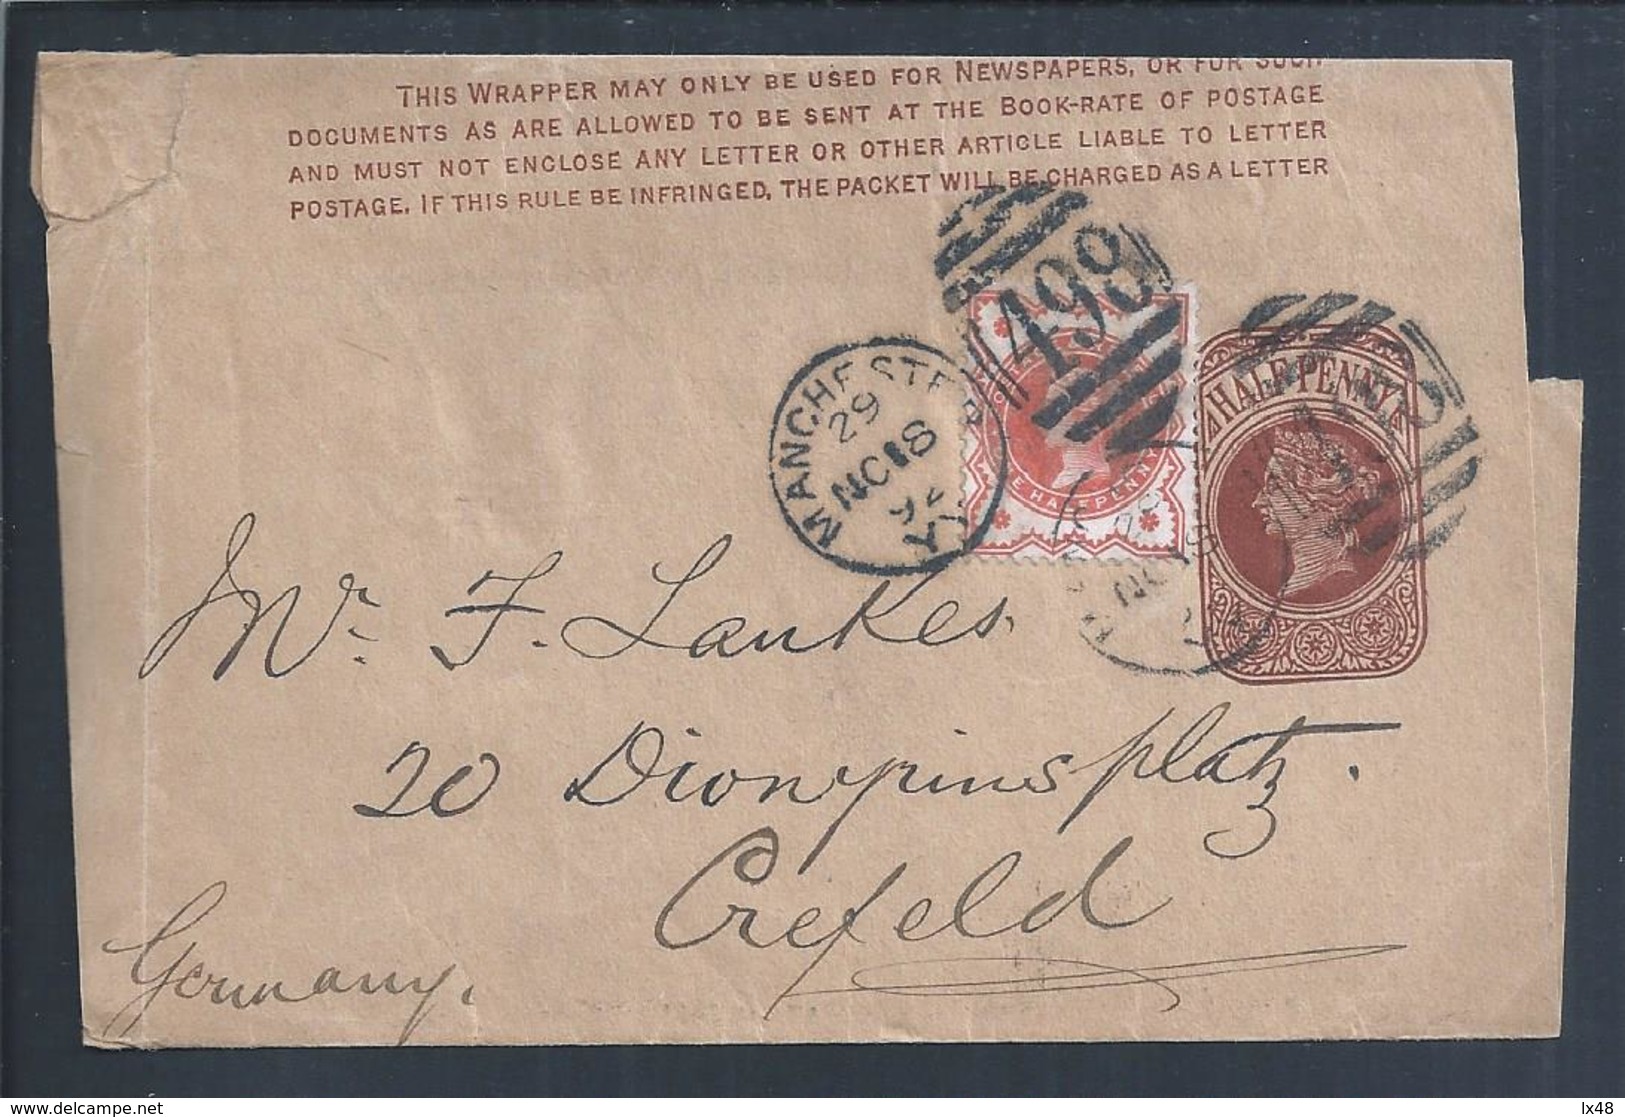 Stationery Newspaper Strap With Additional Stamp From Manchester To Crefeld, Germany. Briefpapier-Zeitungsband Mit Zusät - Lettres & Documents